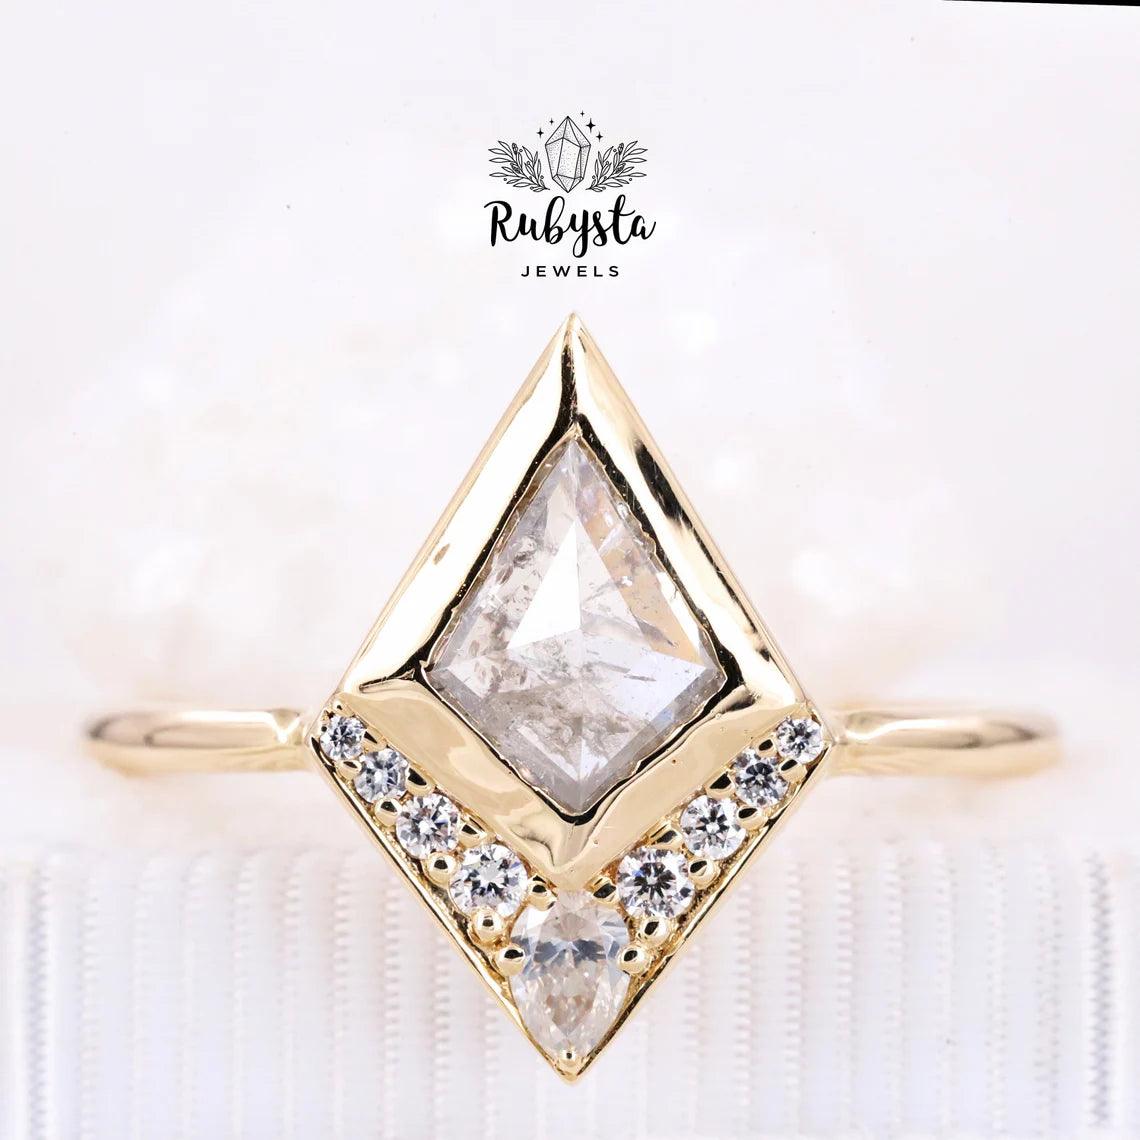 Salt and Pepper Diamond Ring | Kite Diamond Ring - Rubysta